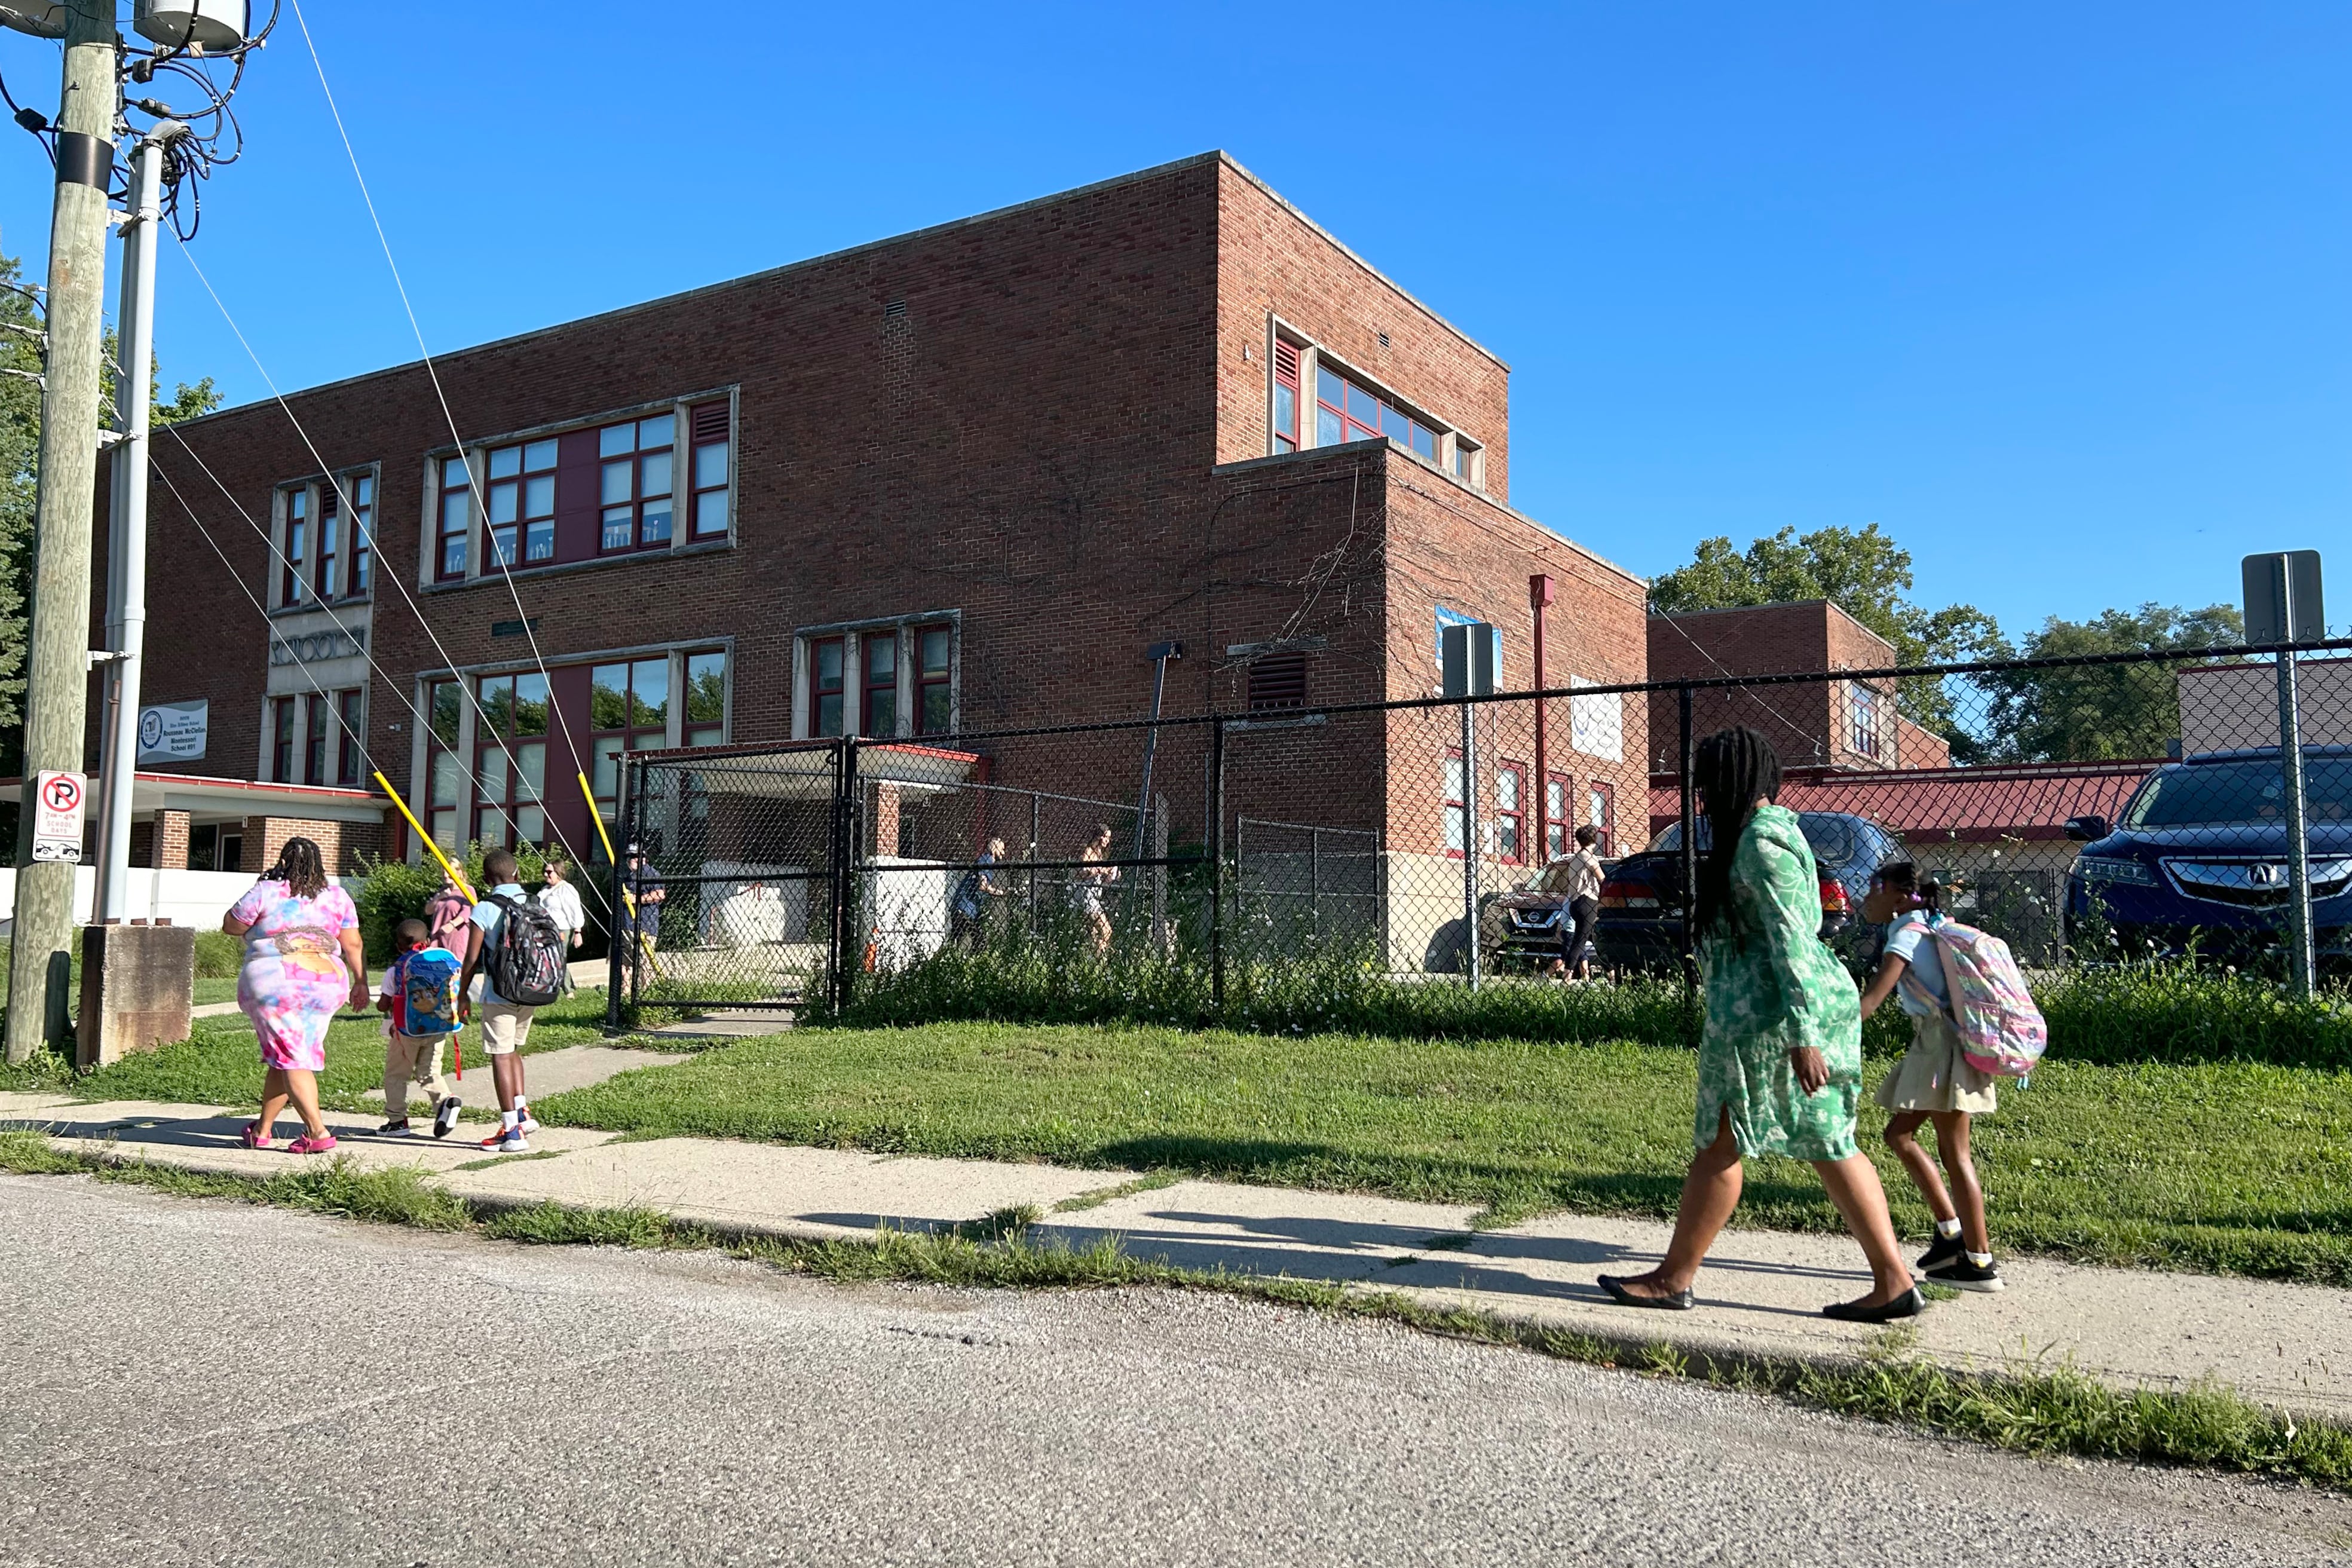 Five people walk on a sidewalk heading into a brick school building.